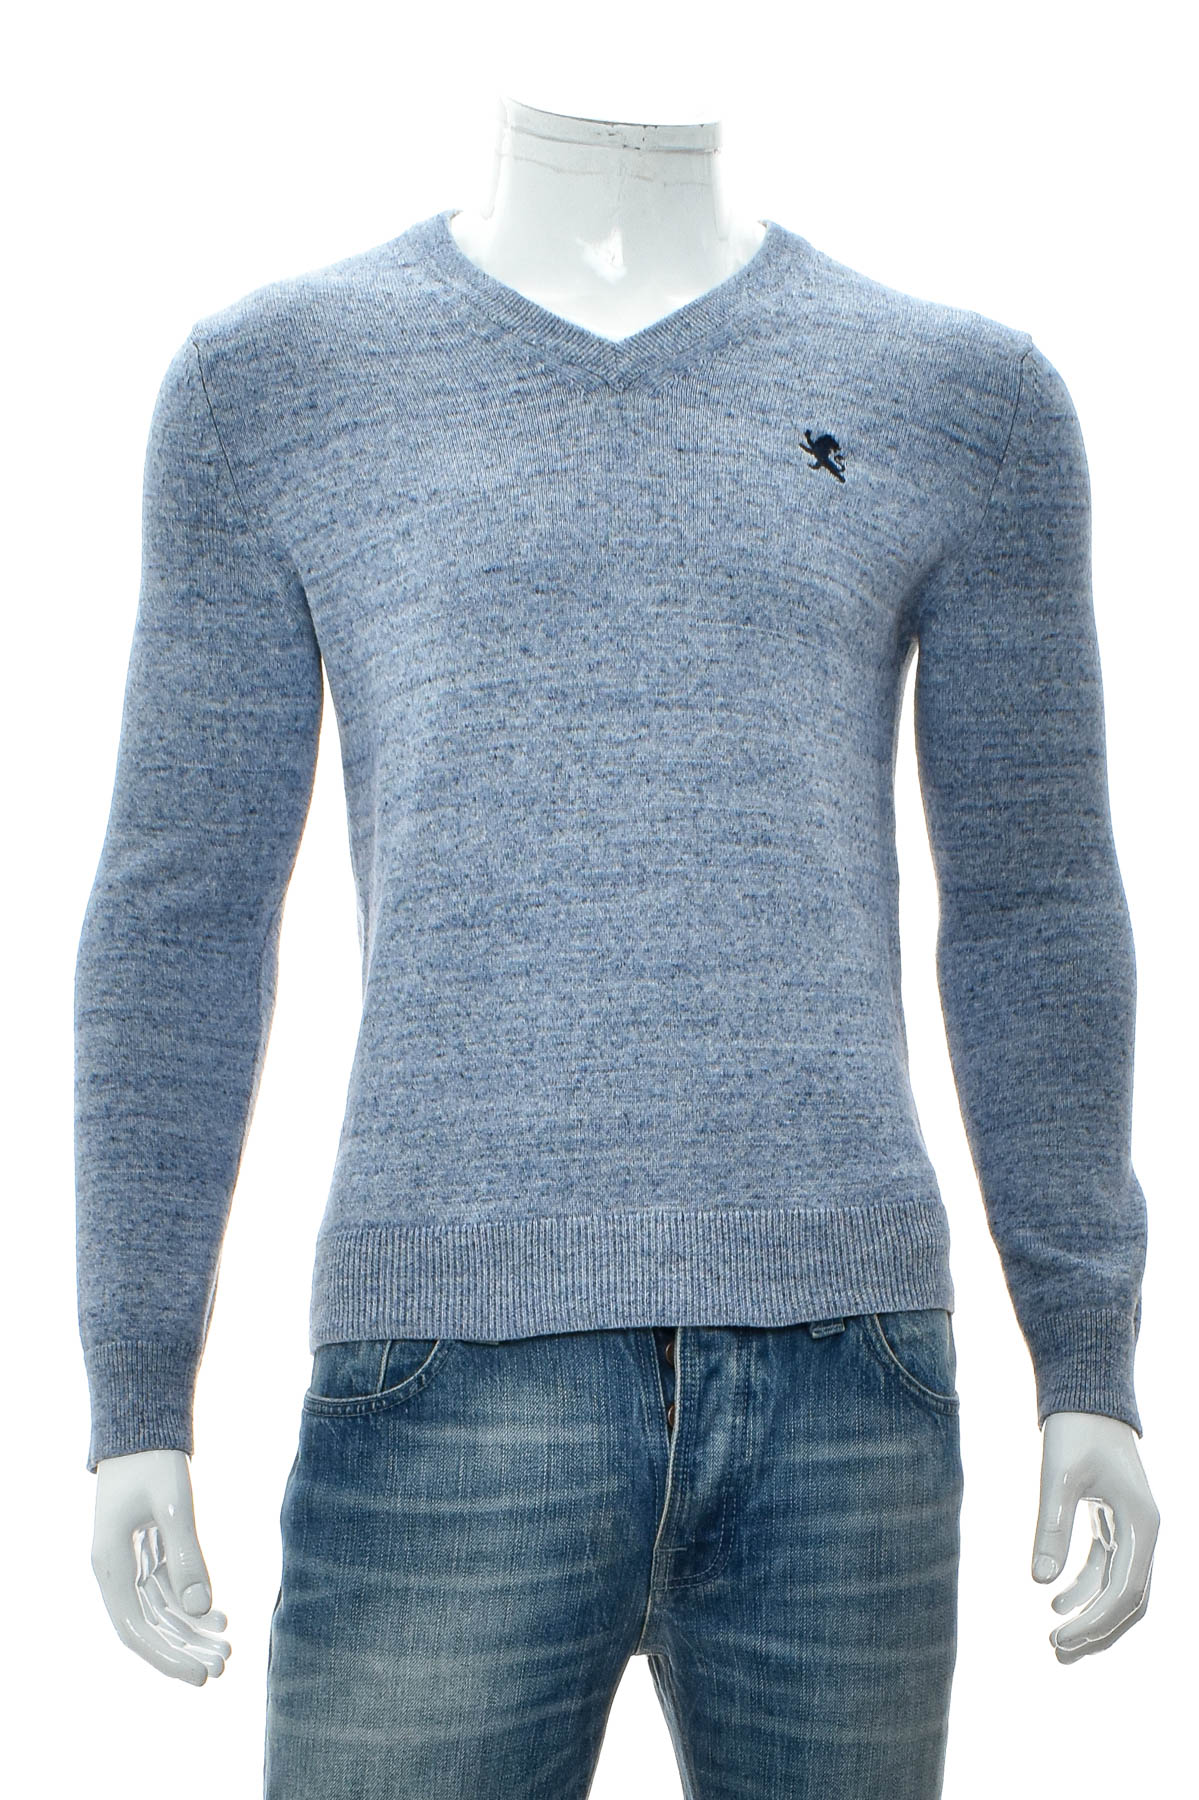 Men's sweater - Express - 0